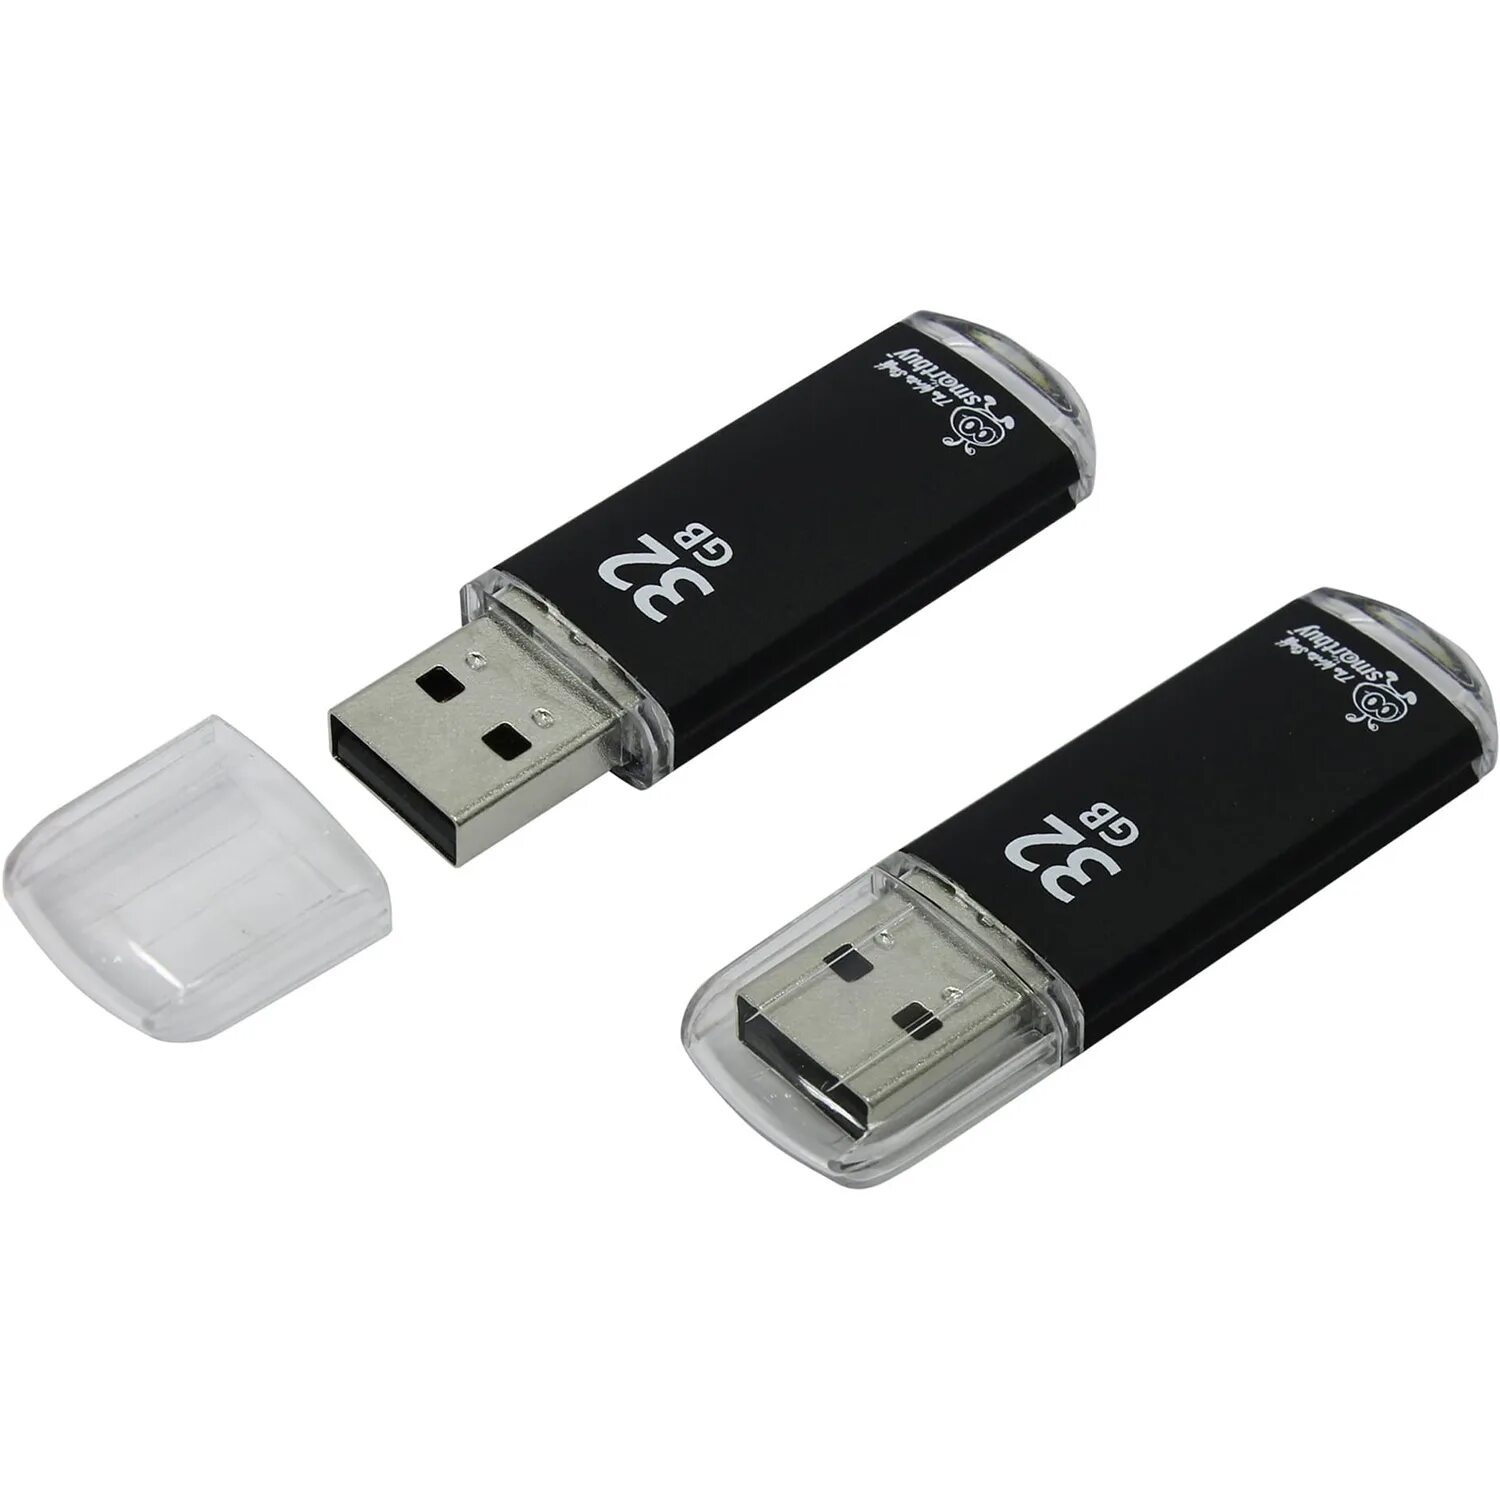 Флешка купить 32 цена. Флешка SMARTBUY V-Cut USB 2.0 32gb. USB-накопитель SMARTBUY 32gb v-Cut Black. Флешка СМАРТБАЙ 32. Флешка SMARTBUY 32gb.